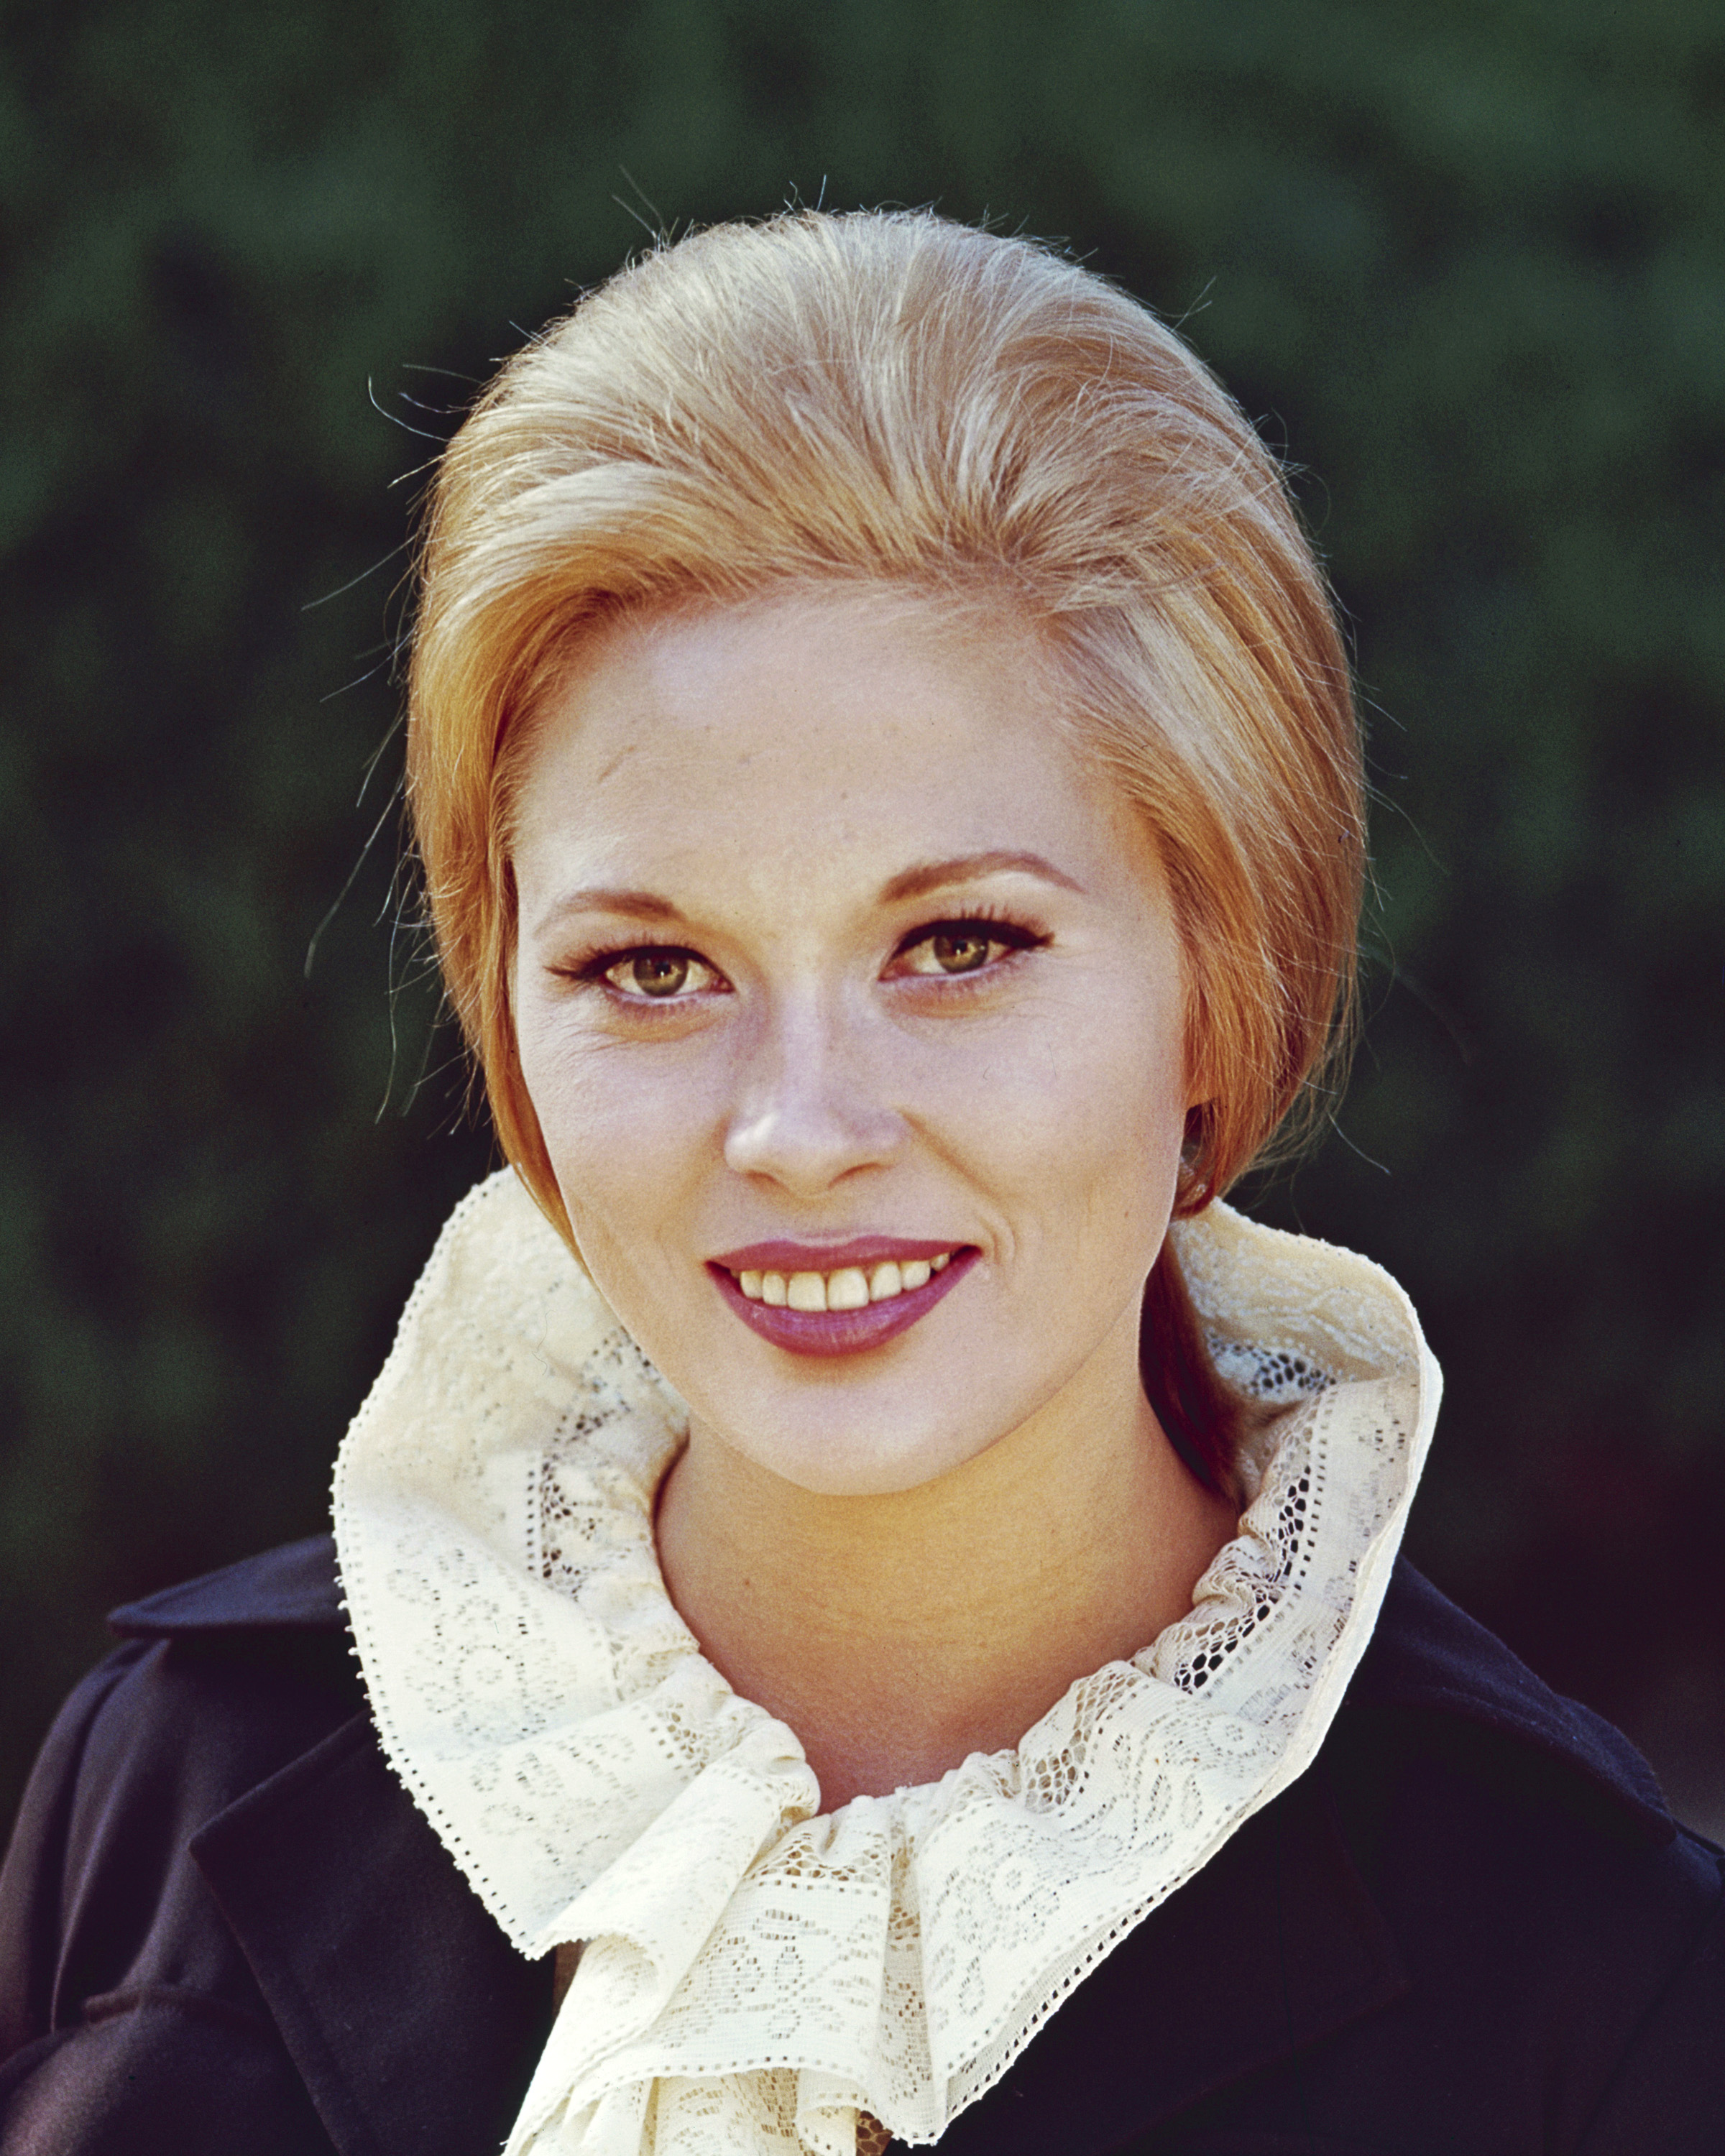 Portrait de Faye Dunaway Faye Dunaway, 1970 | Source : Getty Images